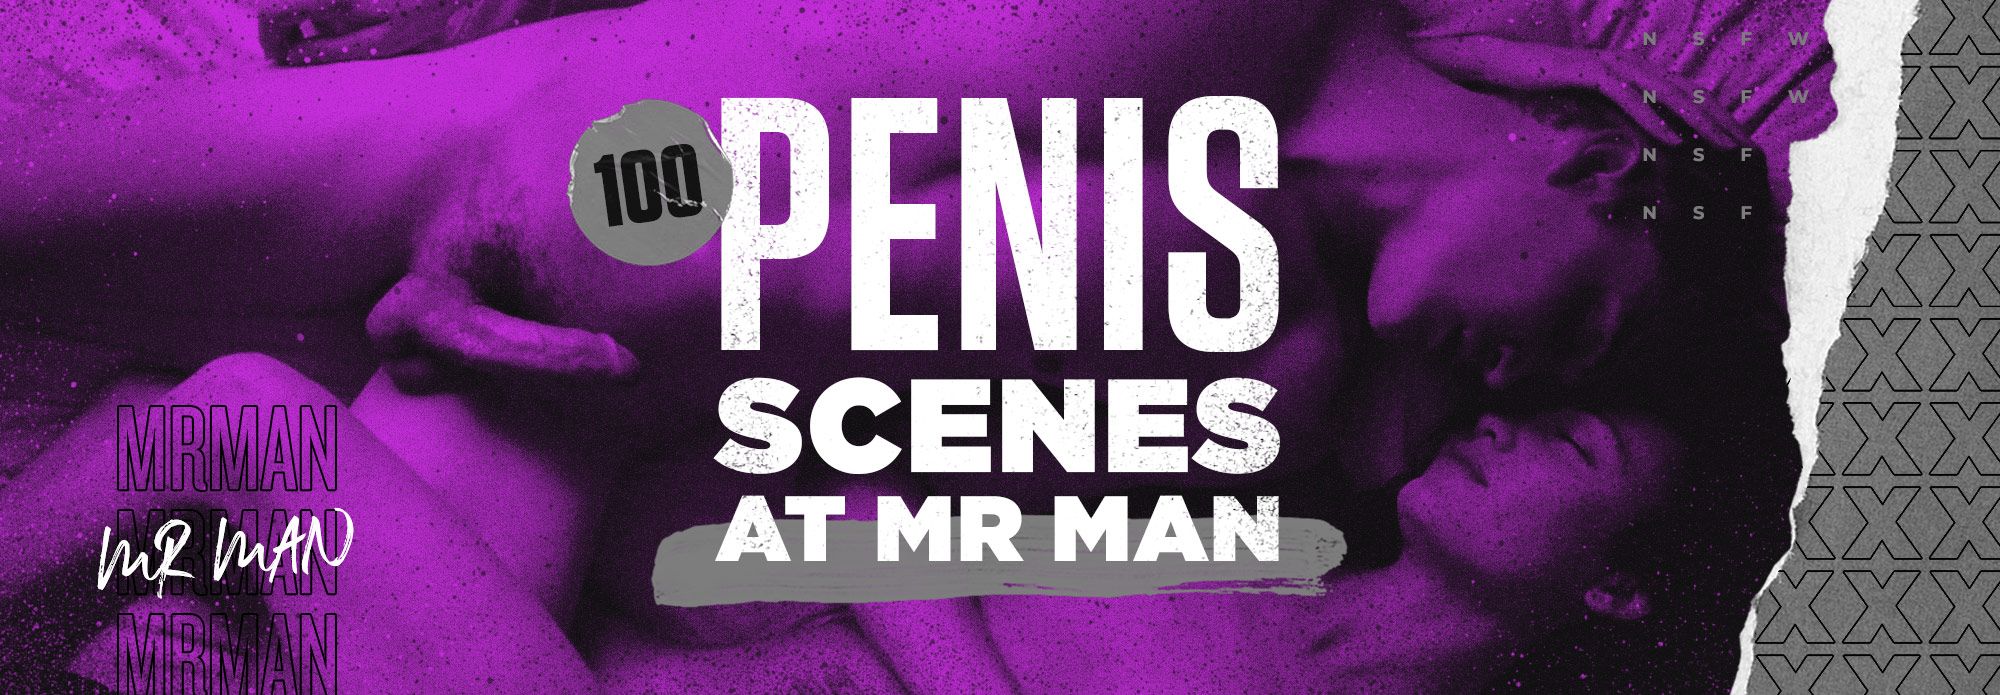 Top 100 Celeb Penis Scenes